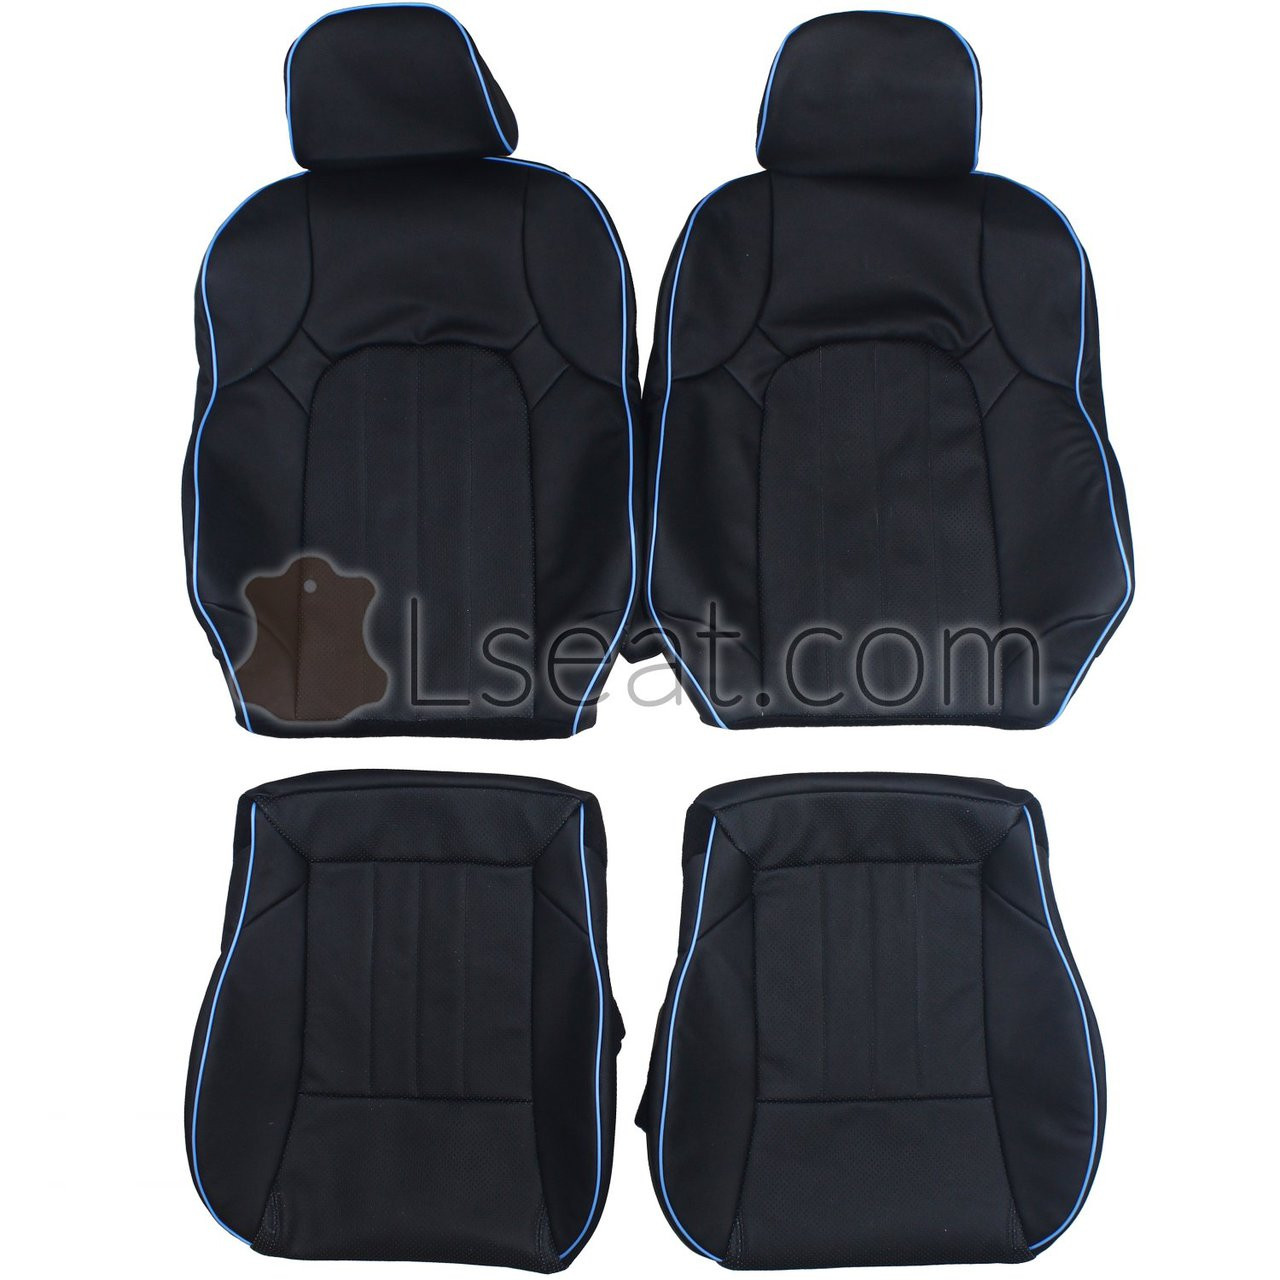 2001-2008 Hyundai Tiburon Custom Real Leather Seat Covers (Front) -  Lseat.com